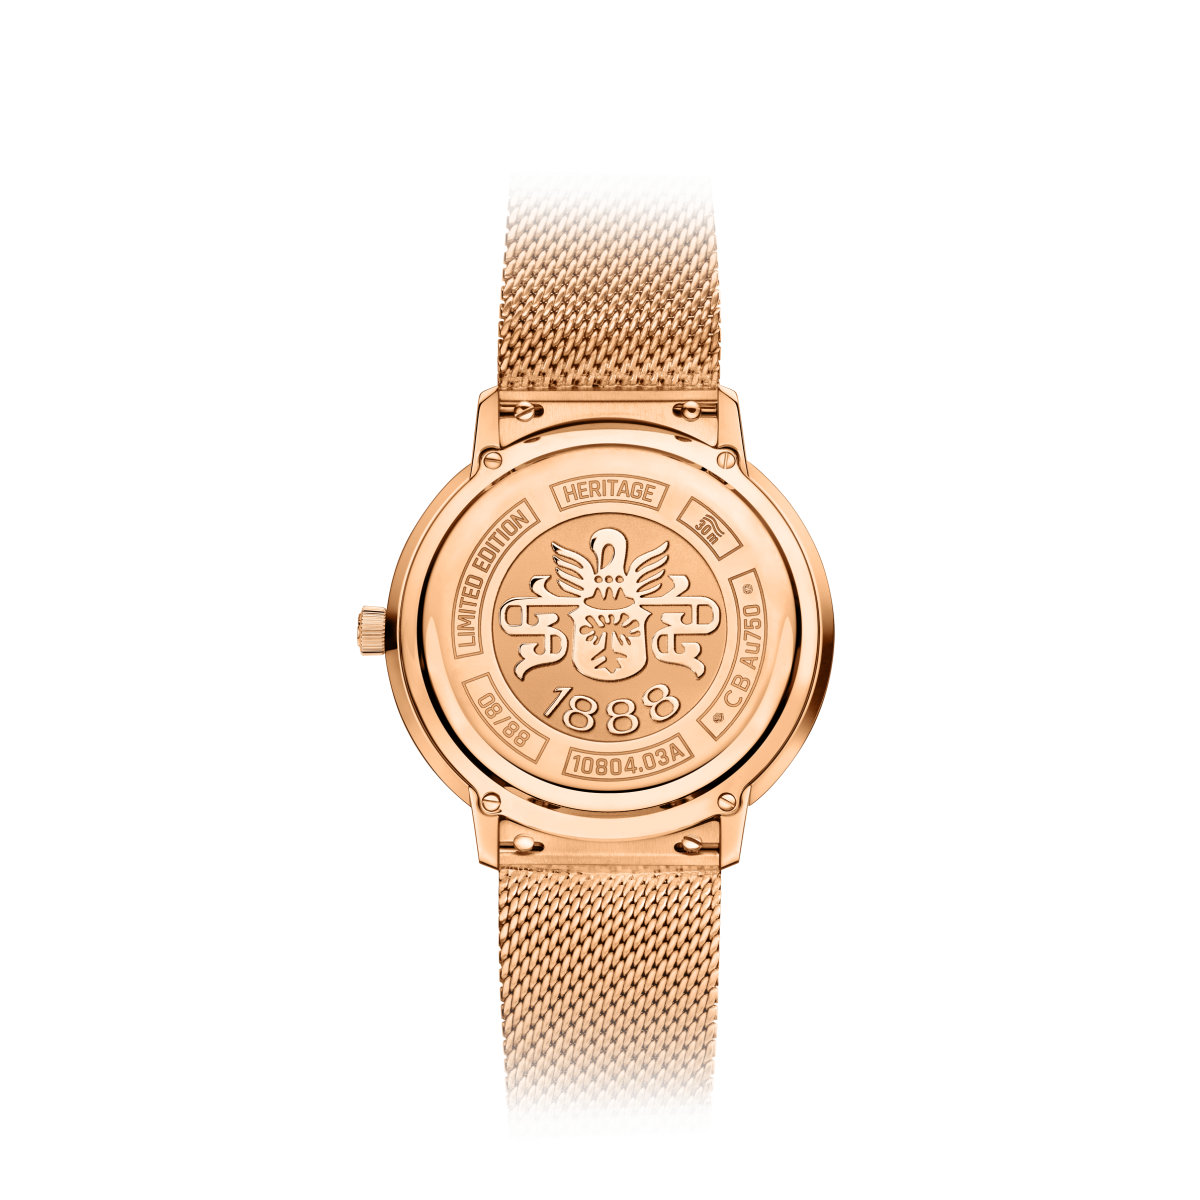 Carl F. Bucherer Haritage Chronometer 18K Rose gold Limited Edition Men's Watch